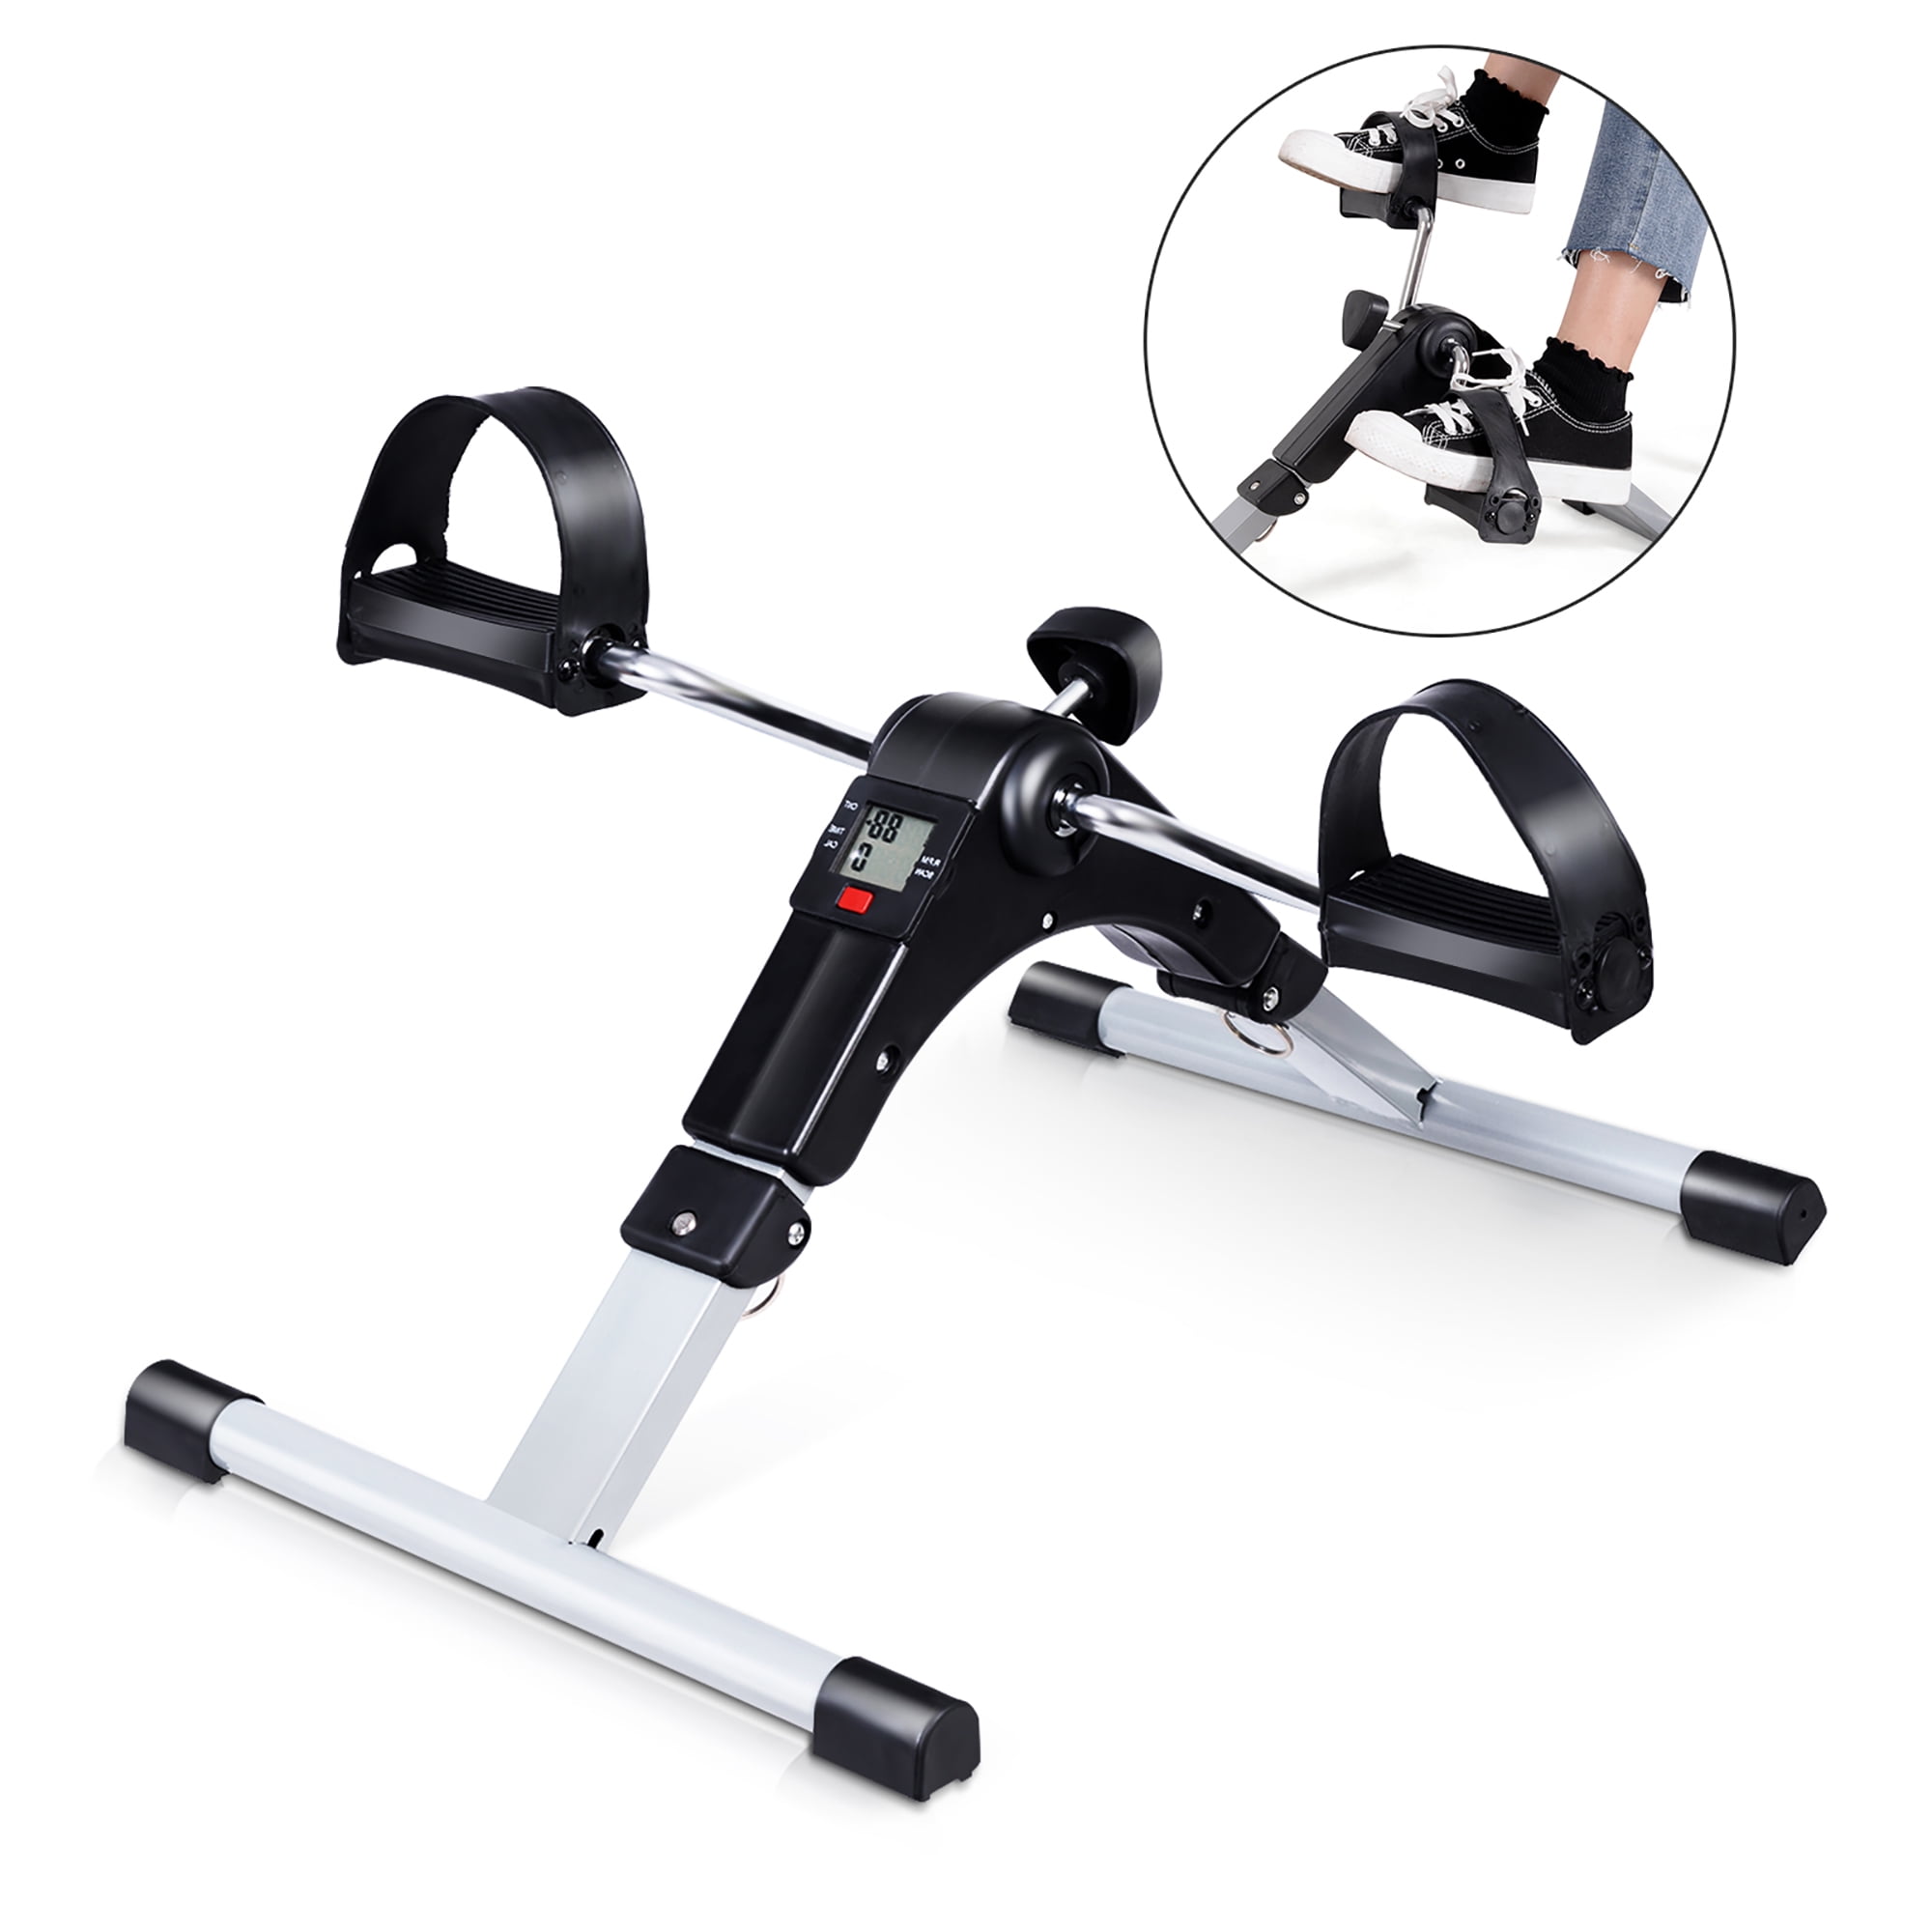 Details about   Folding Fitness Pedal Stationary Under Desk Indoor Exercise Bike for Arms Leg US 